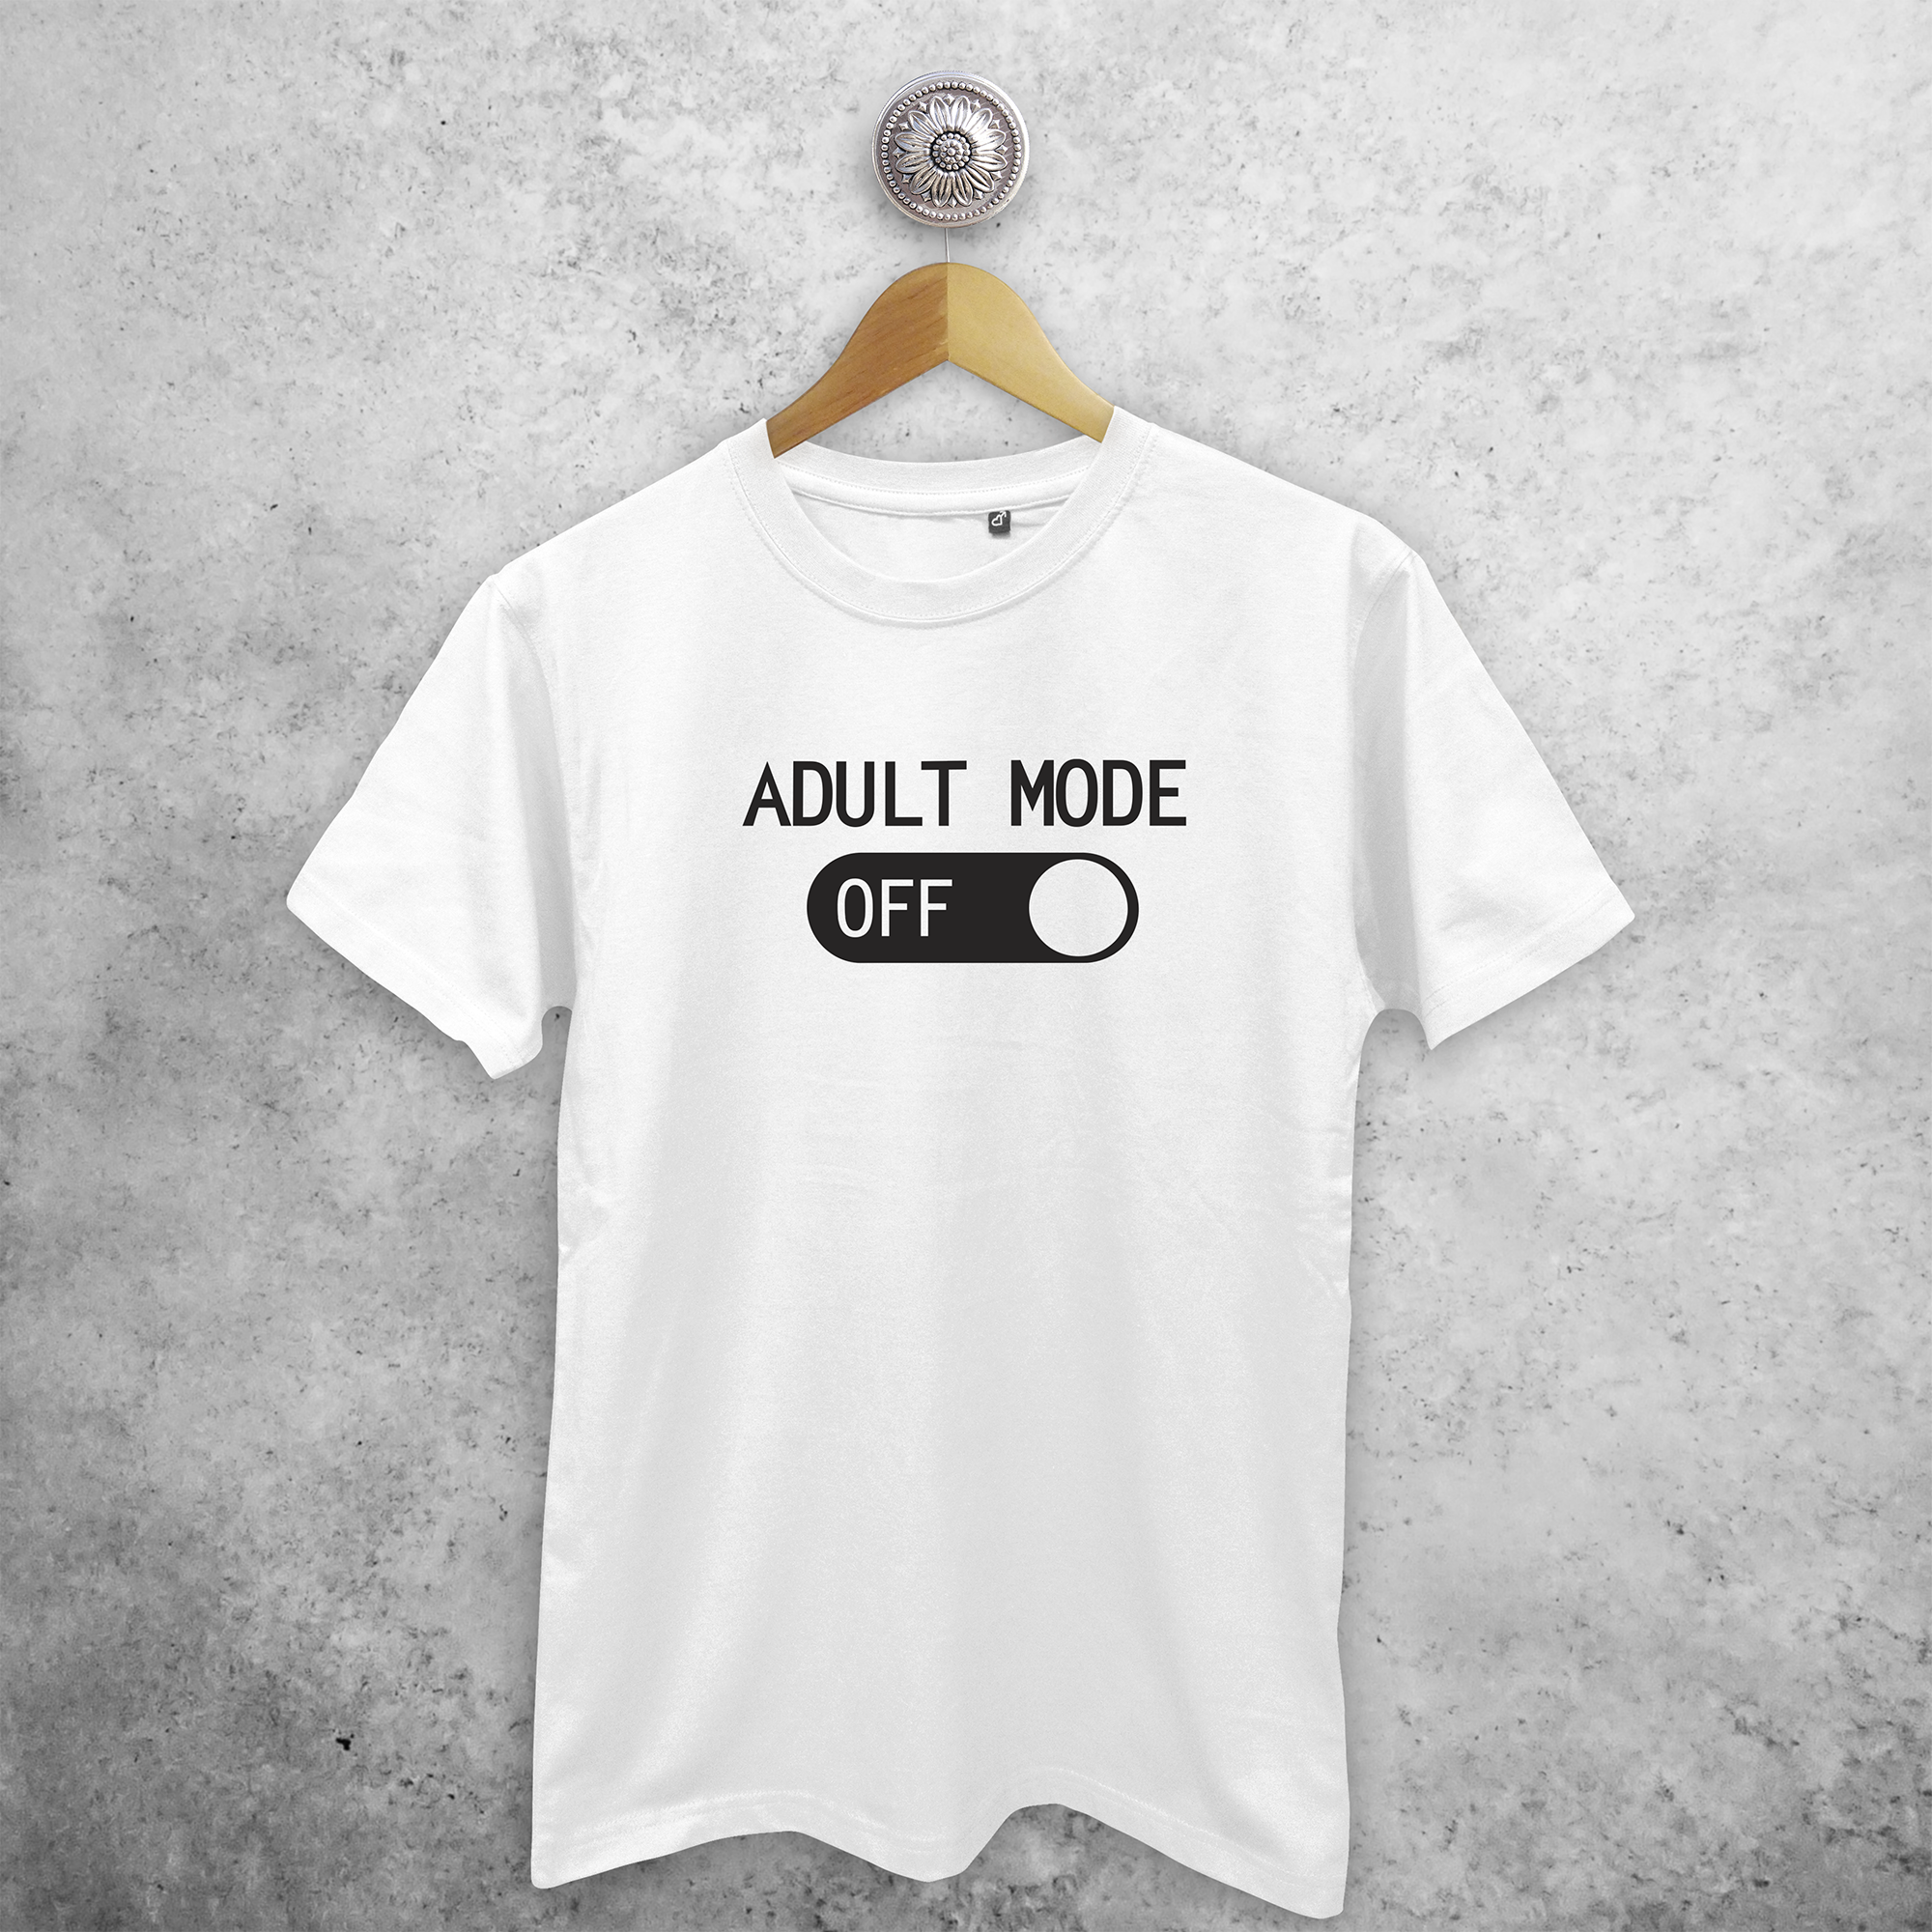 'Adult mode off' adult shirt